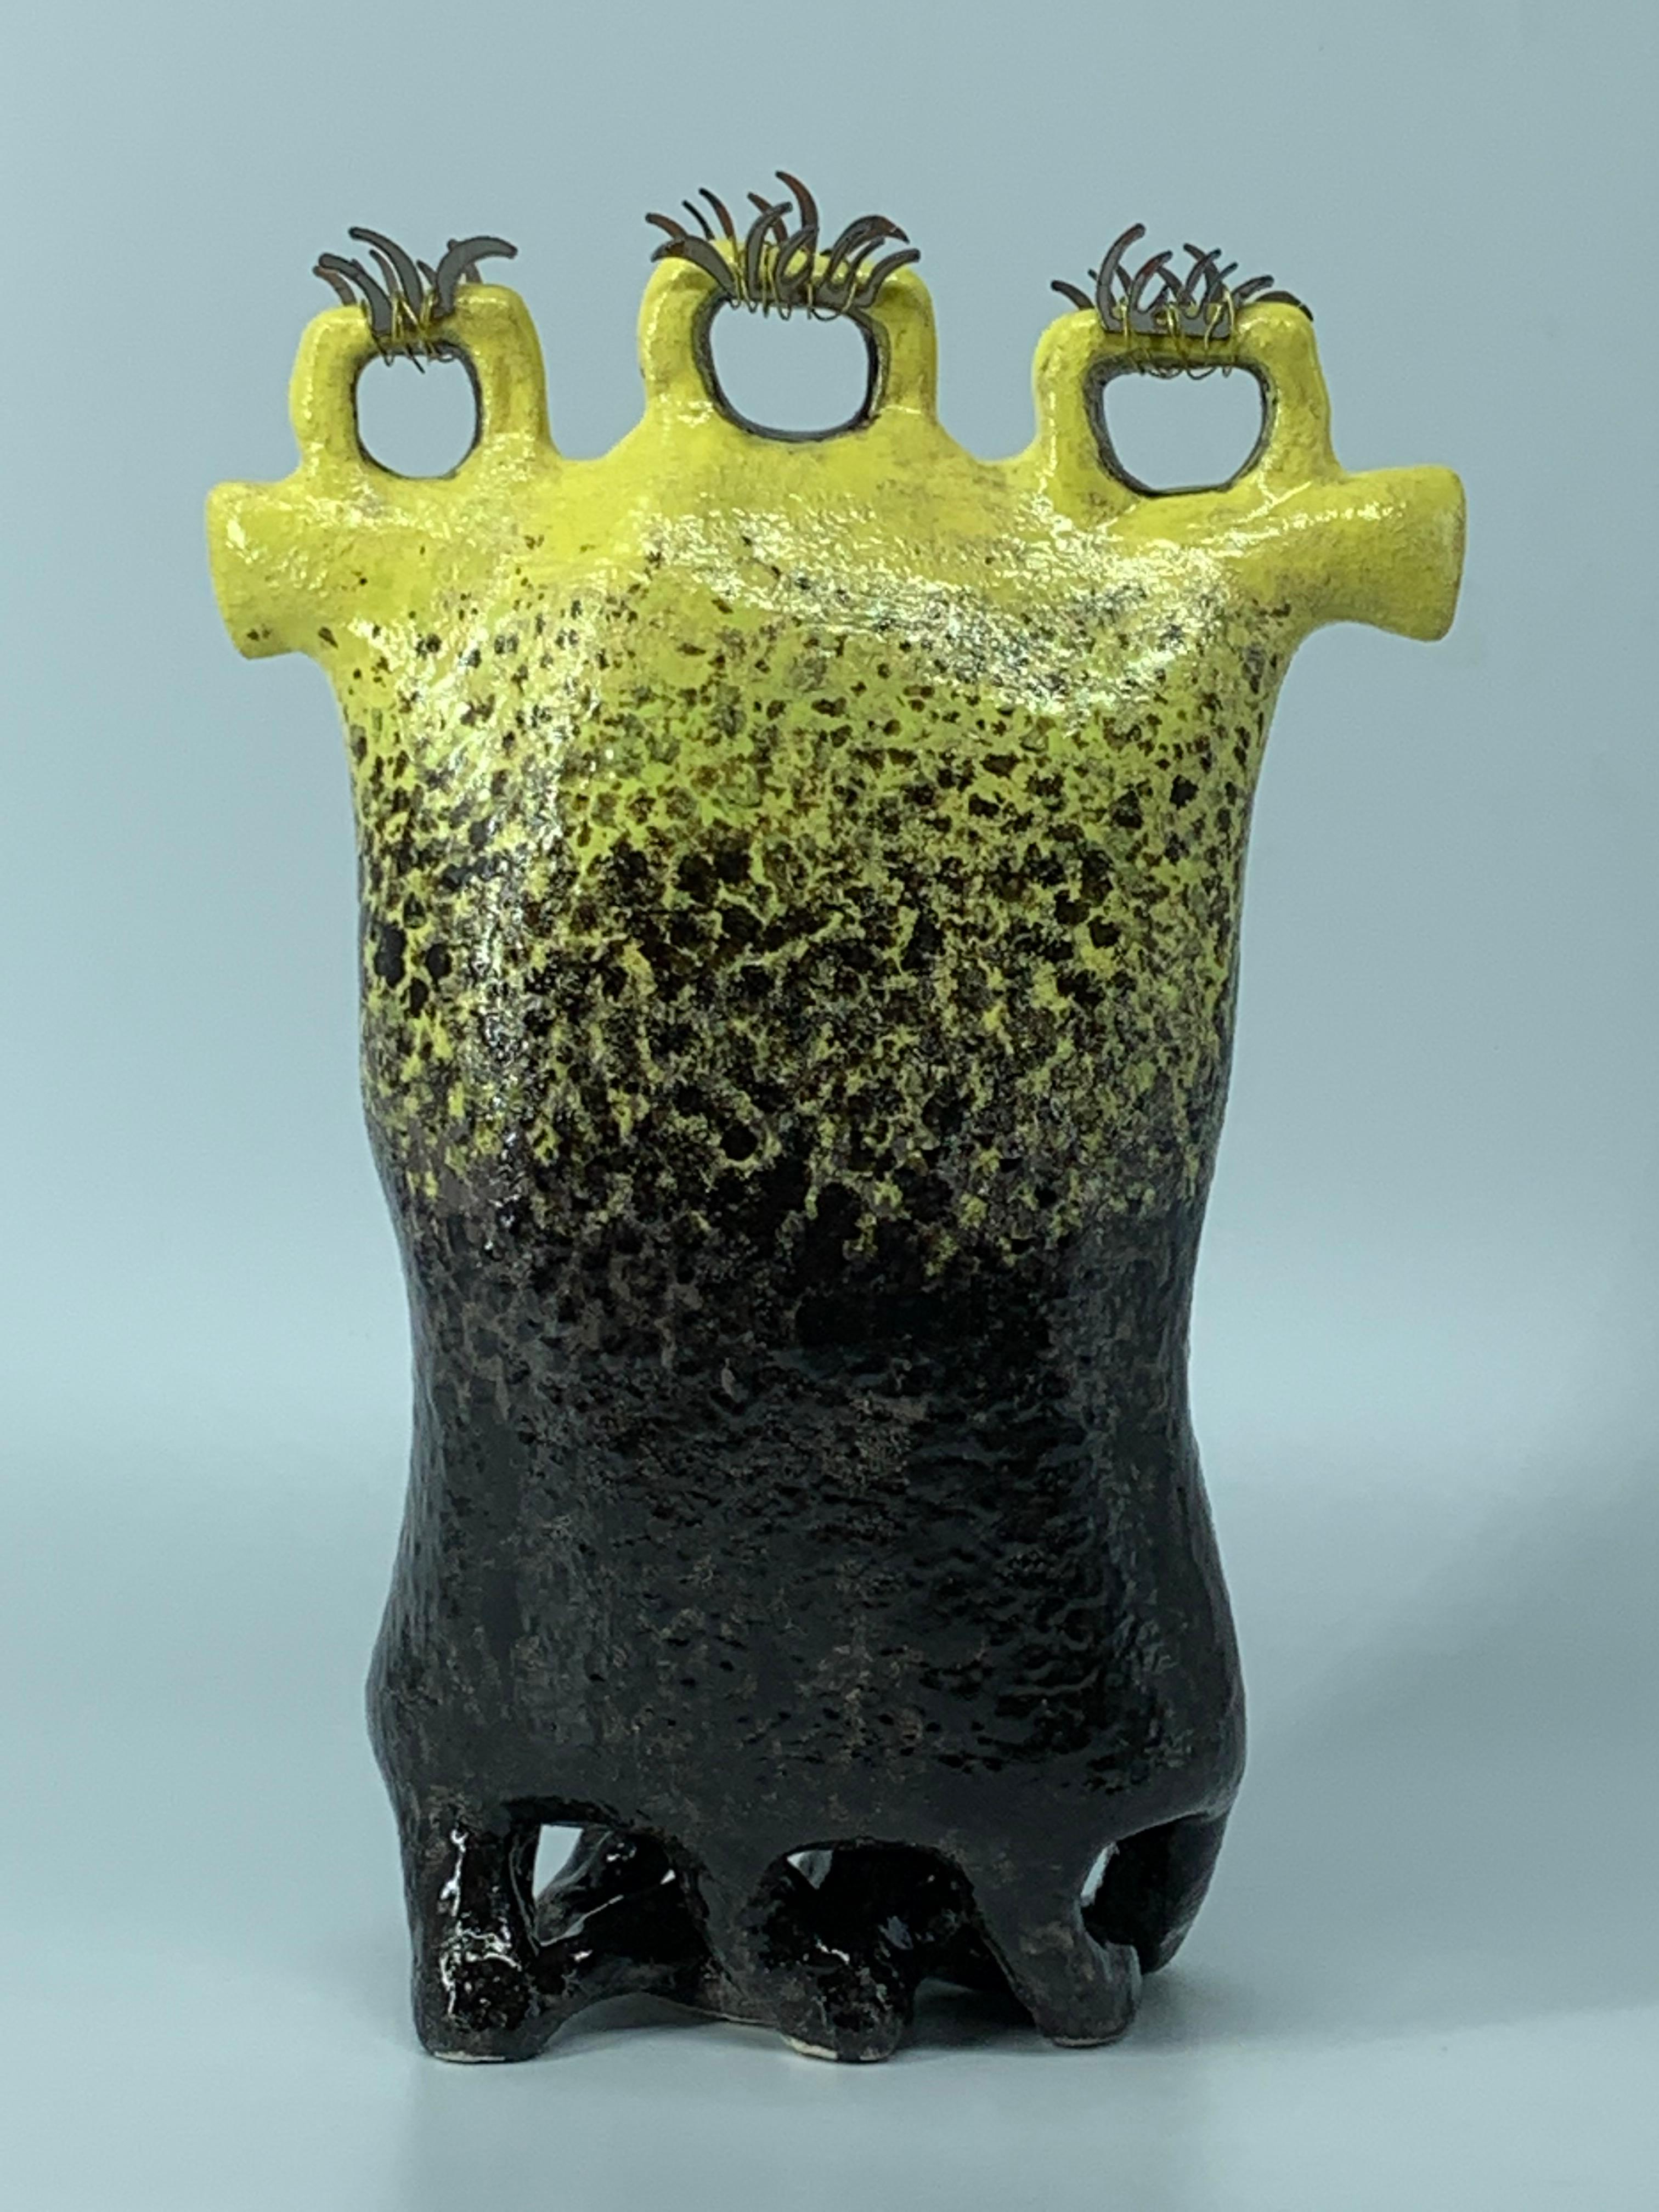 Olesia Dvorak-Galik Abstract Sculpture - Yellow creature